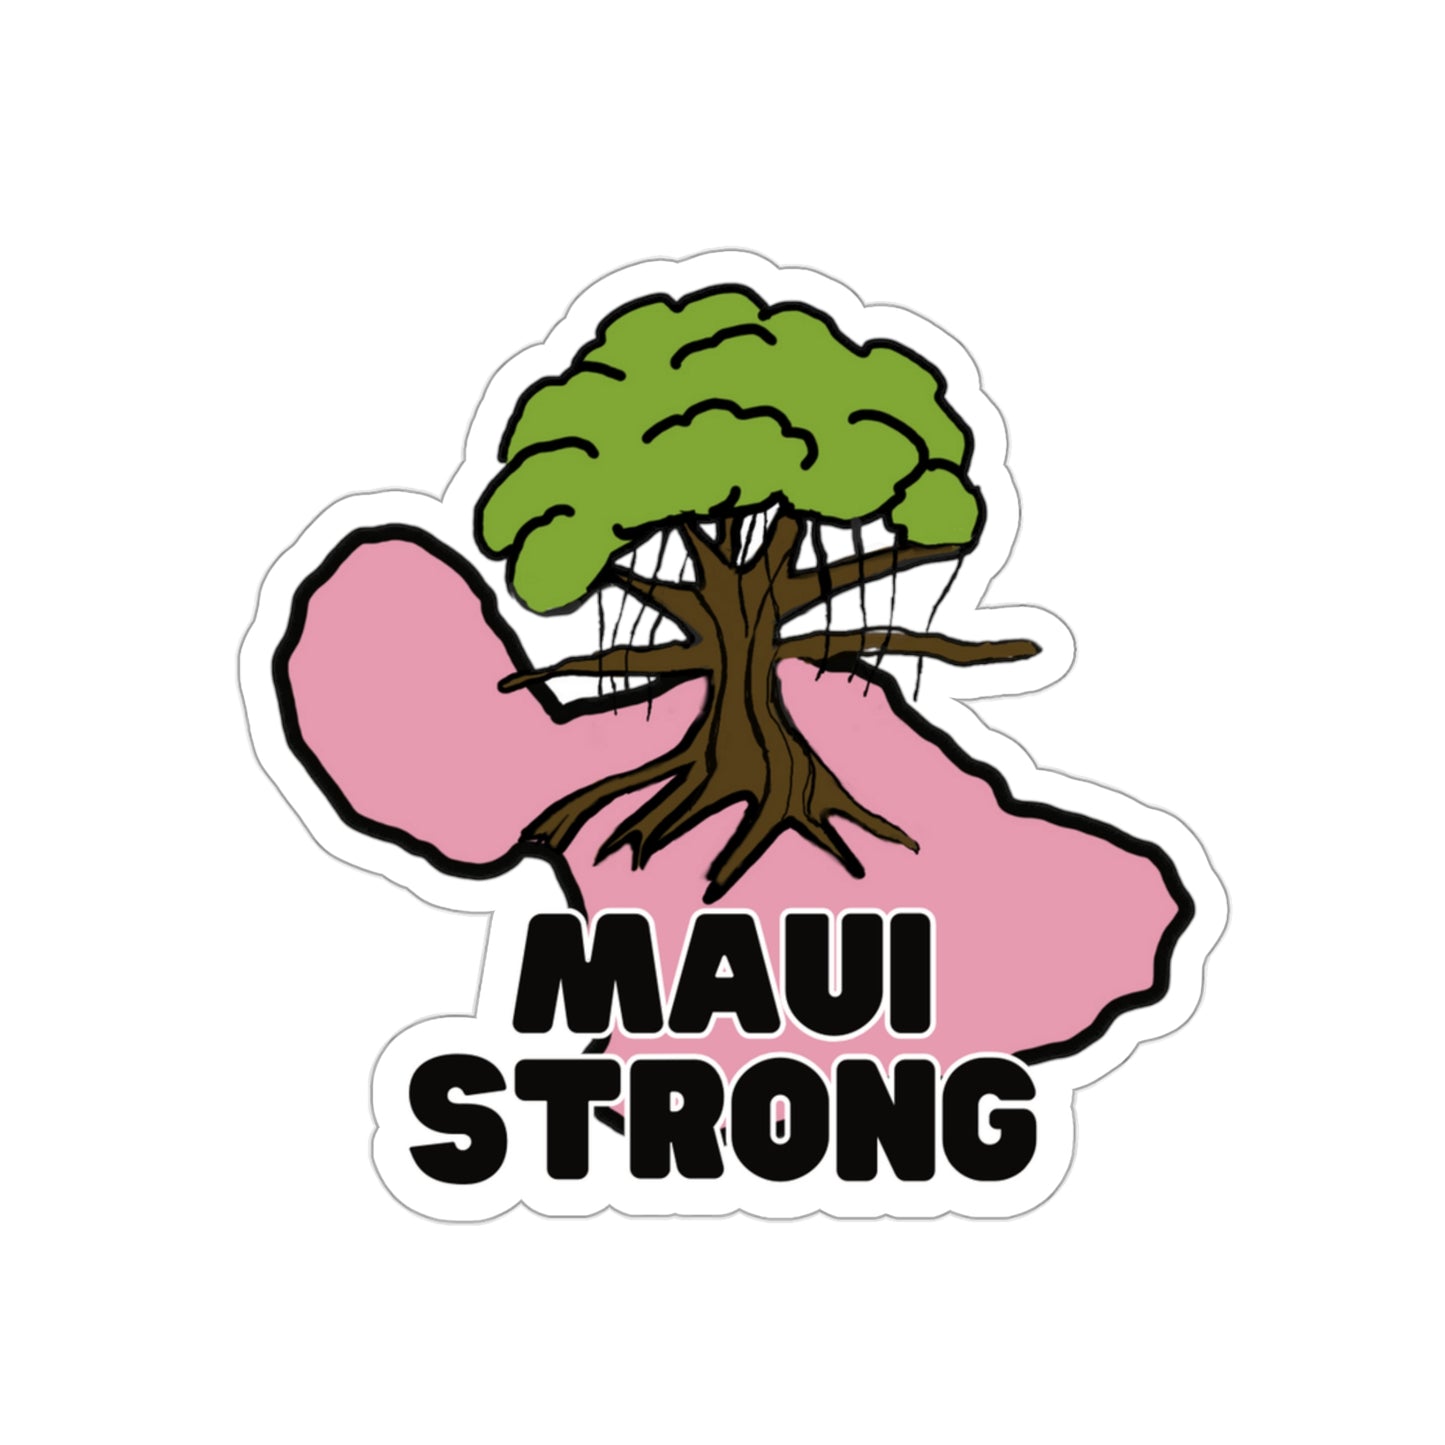 Maui Strong Sticker Donation